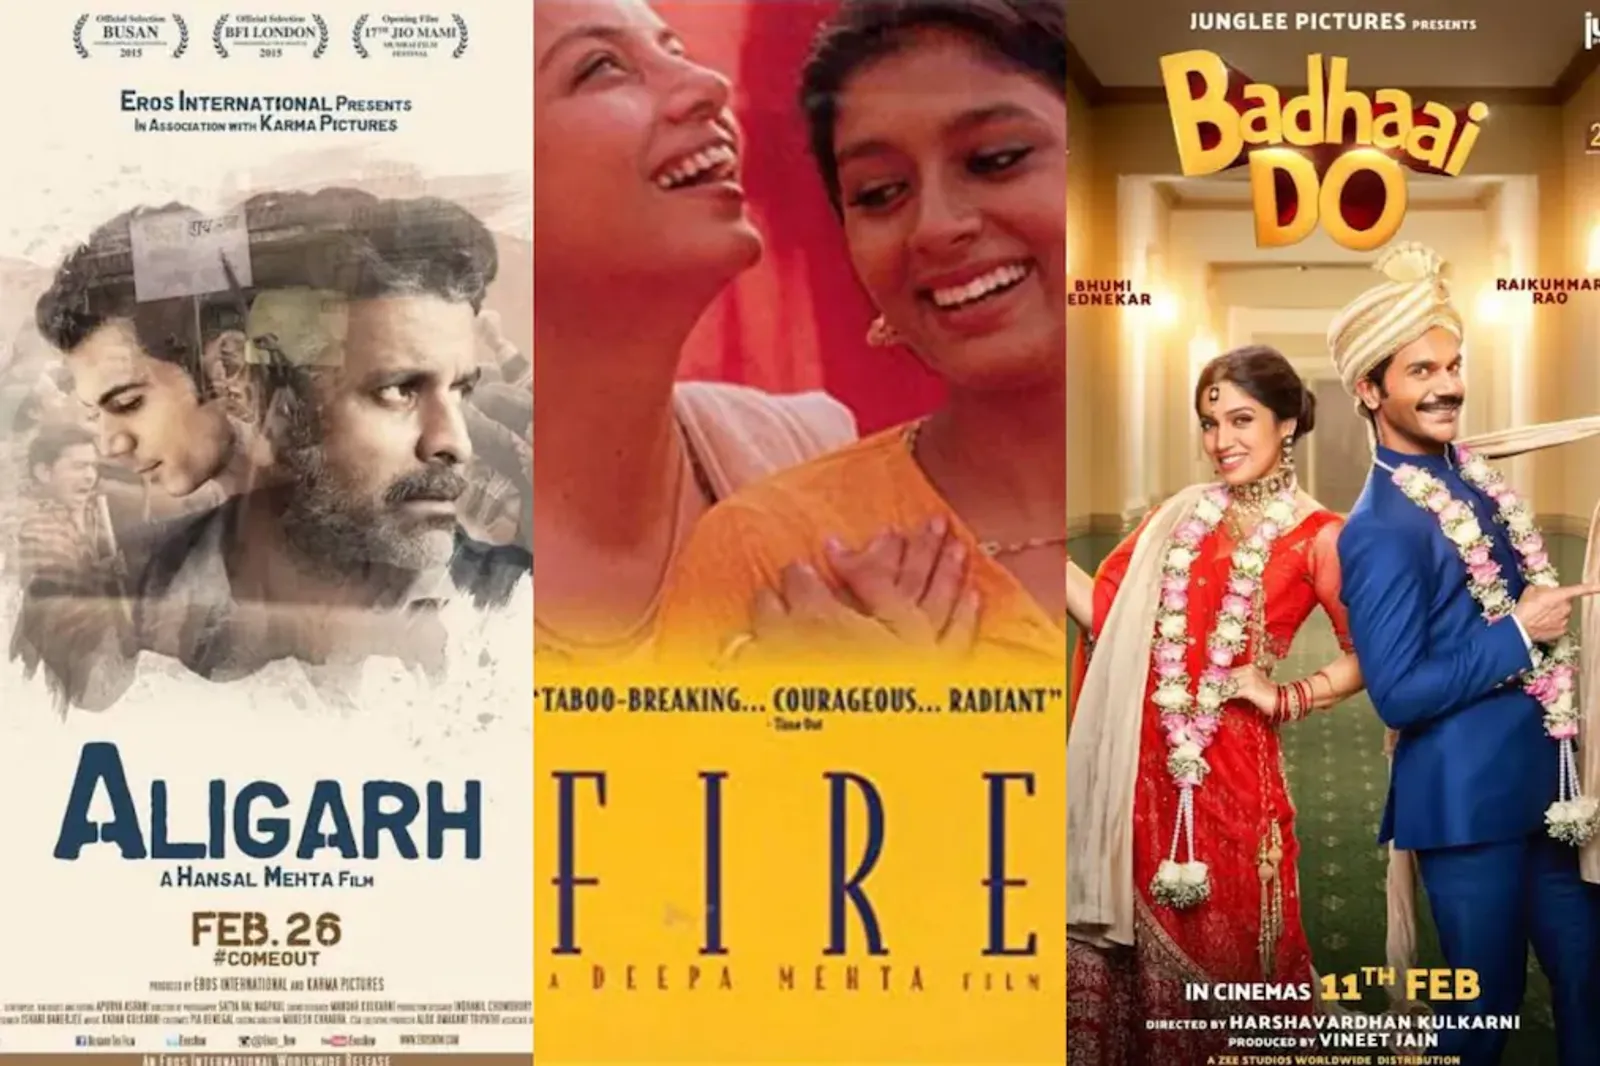 5 Daftar Film Bollywood yang Bahas Hubungan Sesama Jenis (LGBT) 